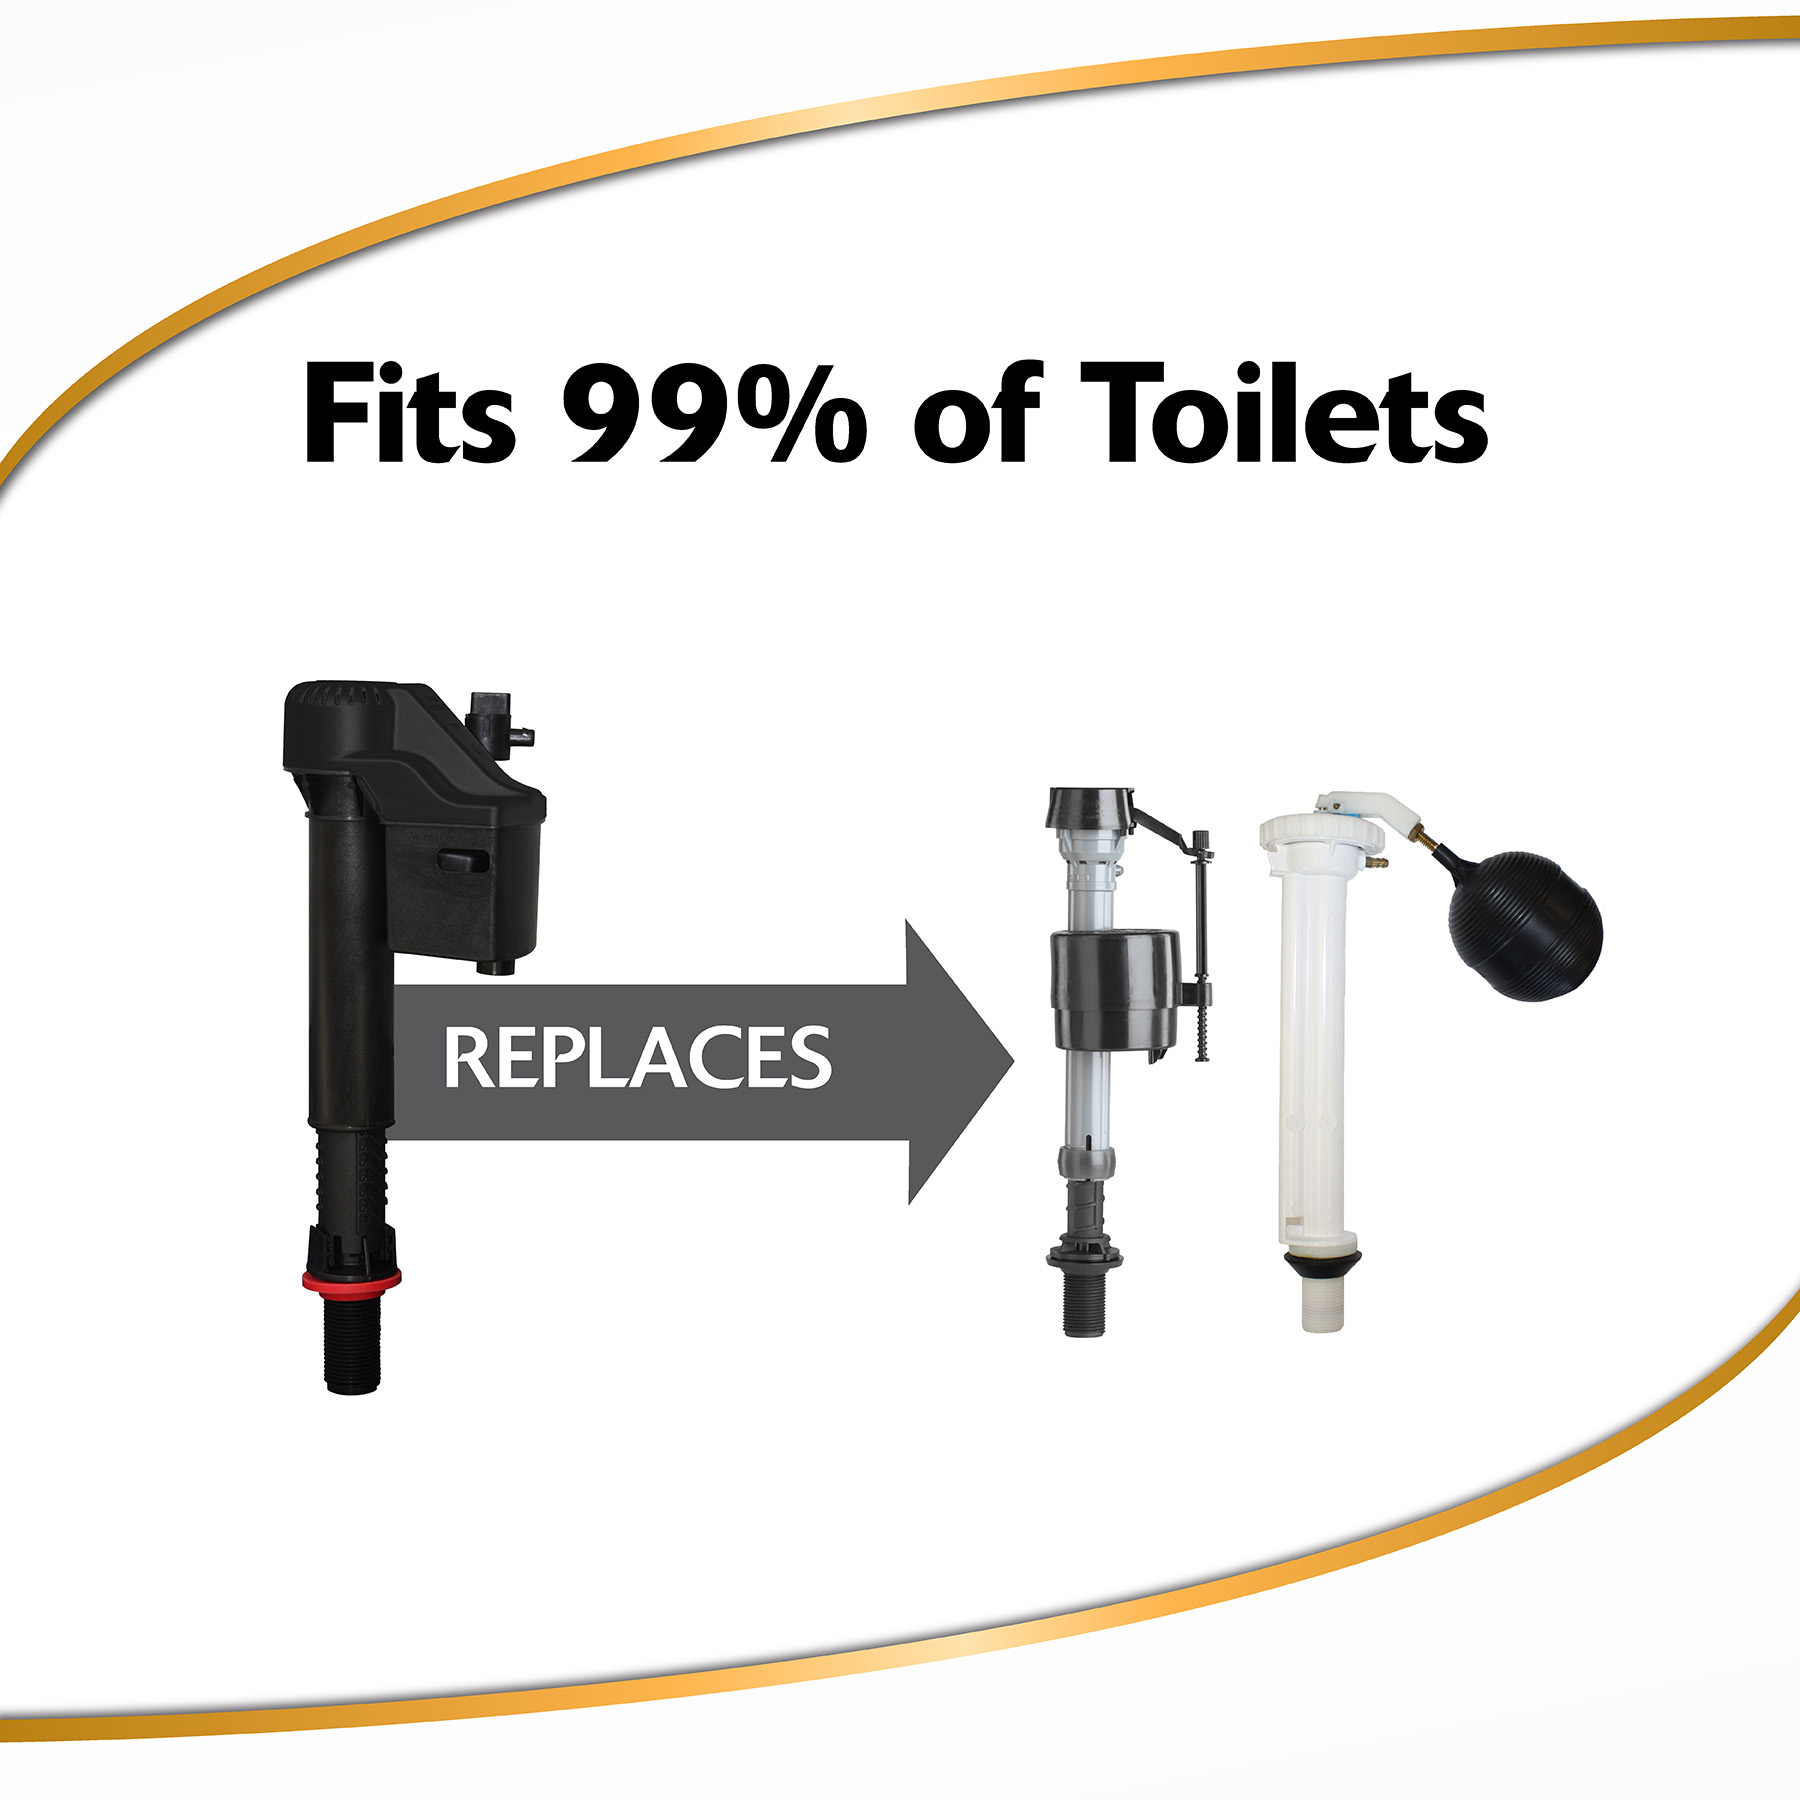 2X Long Life Toilet Fill Valve fits 99% of toilets